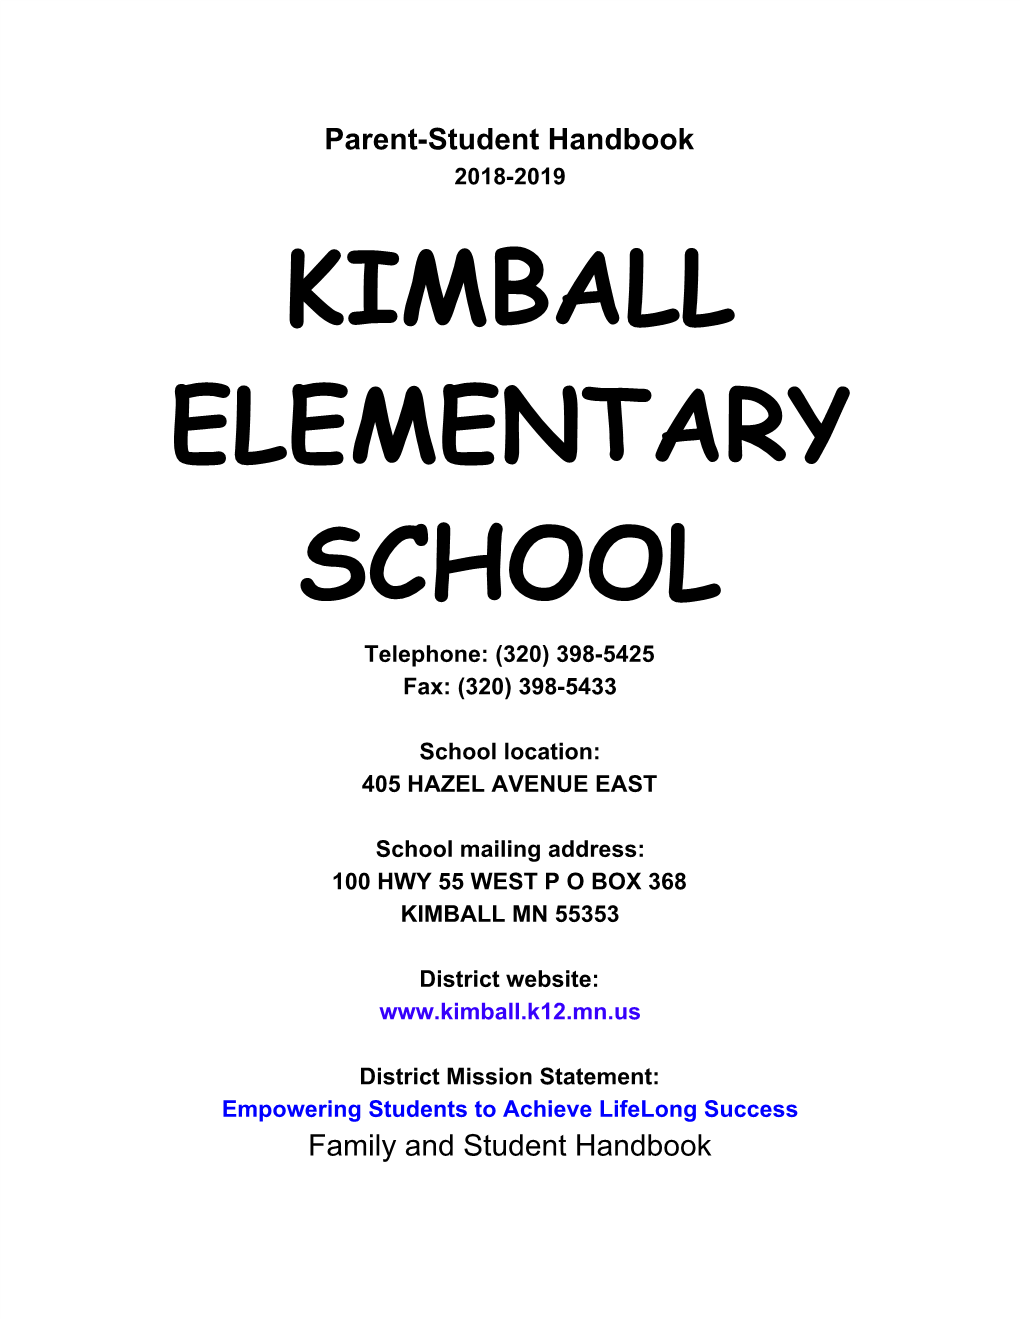 KIMBALL ELEMENTARY SCHOOL Telephone: (320) 398-5425 Fax: (320) 398-5433